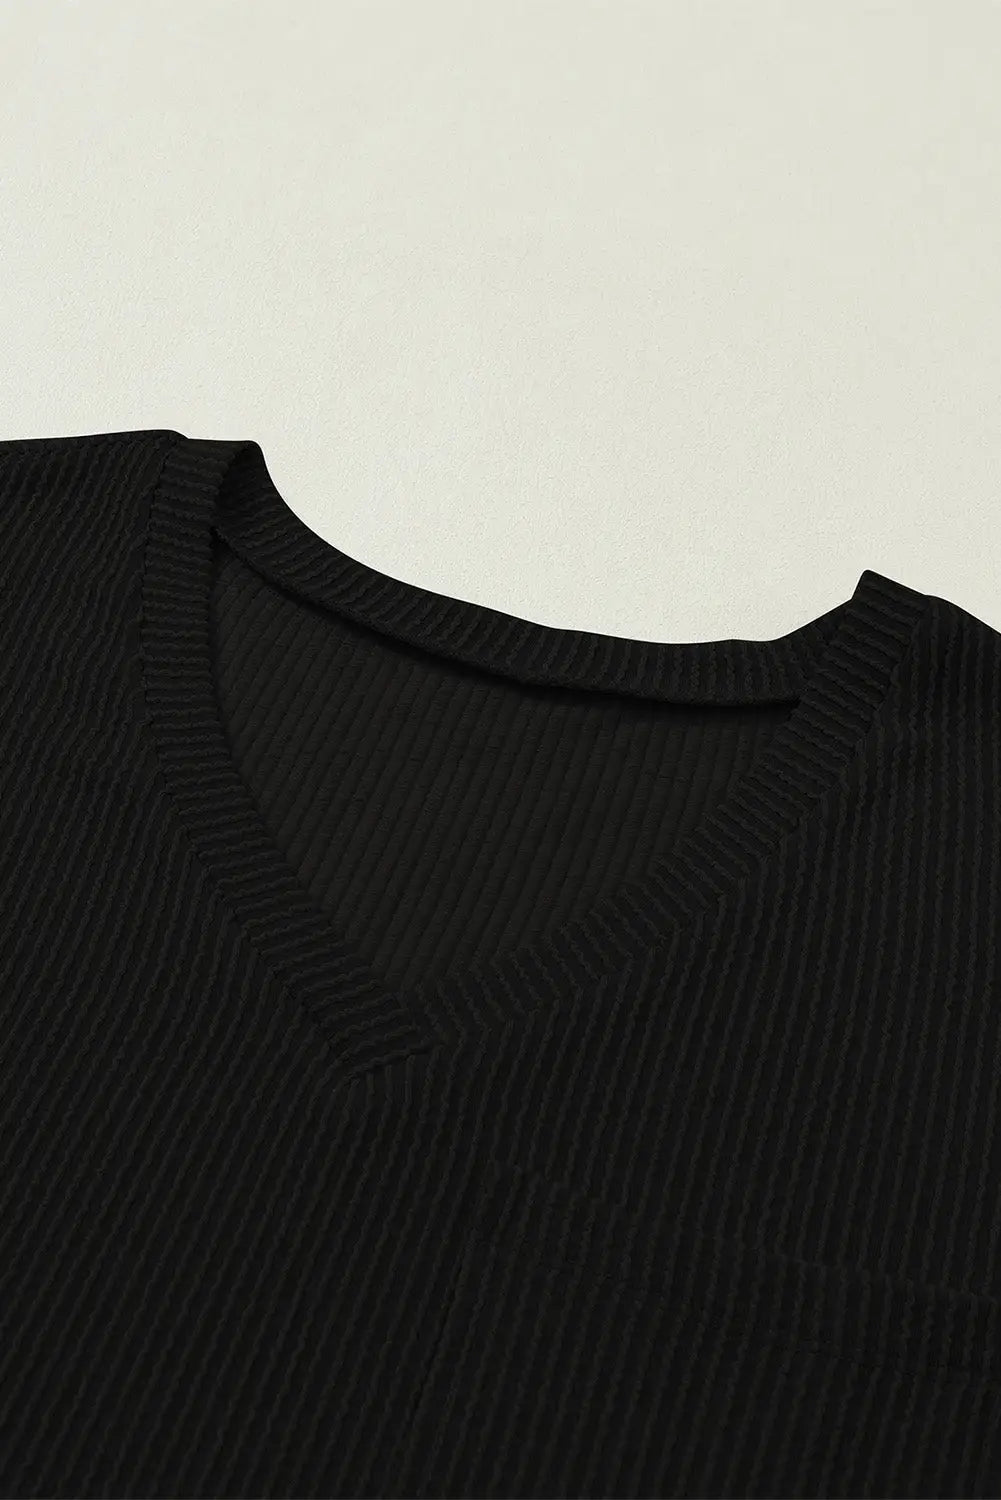 Black corded v neck chest pocket loose t-shirt - t-shirts